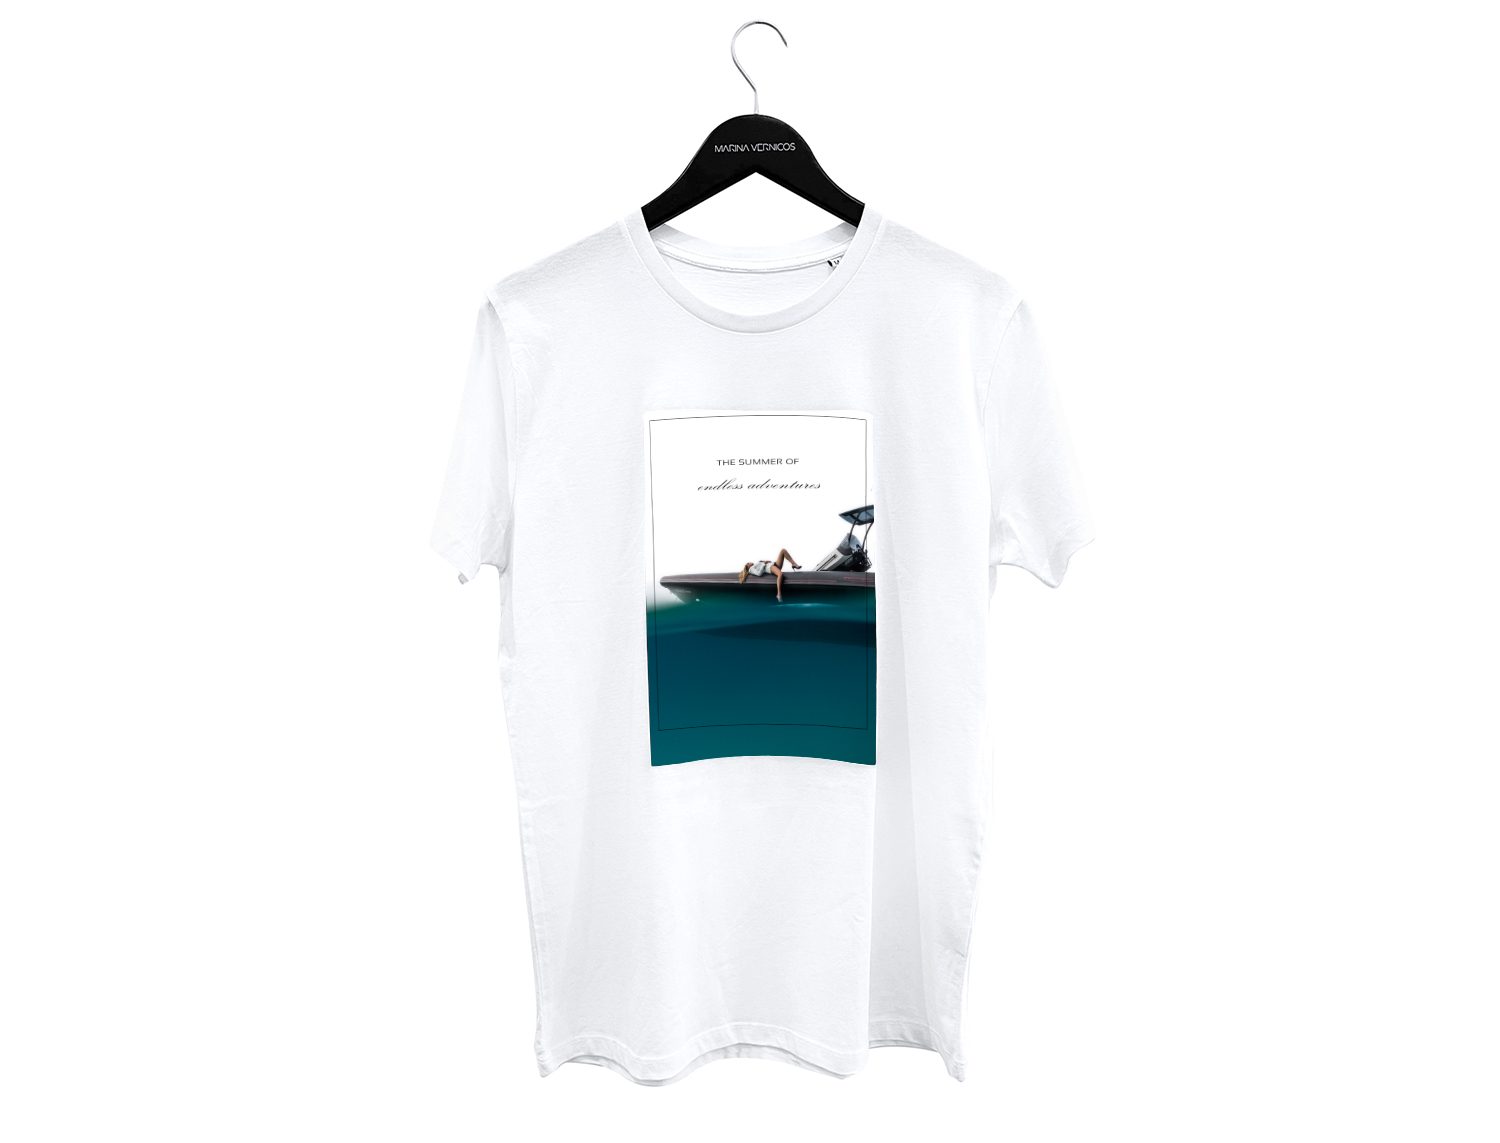 The Summer of Endless Adventures - Λευκό T-Shirt